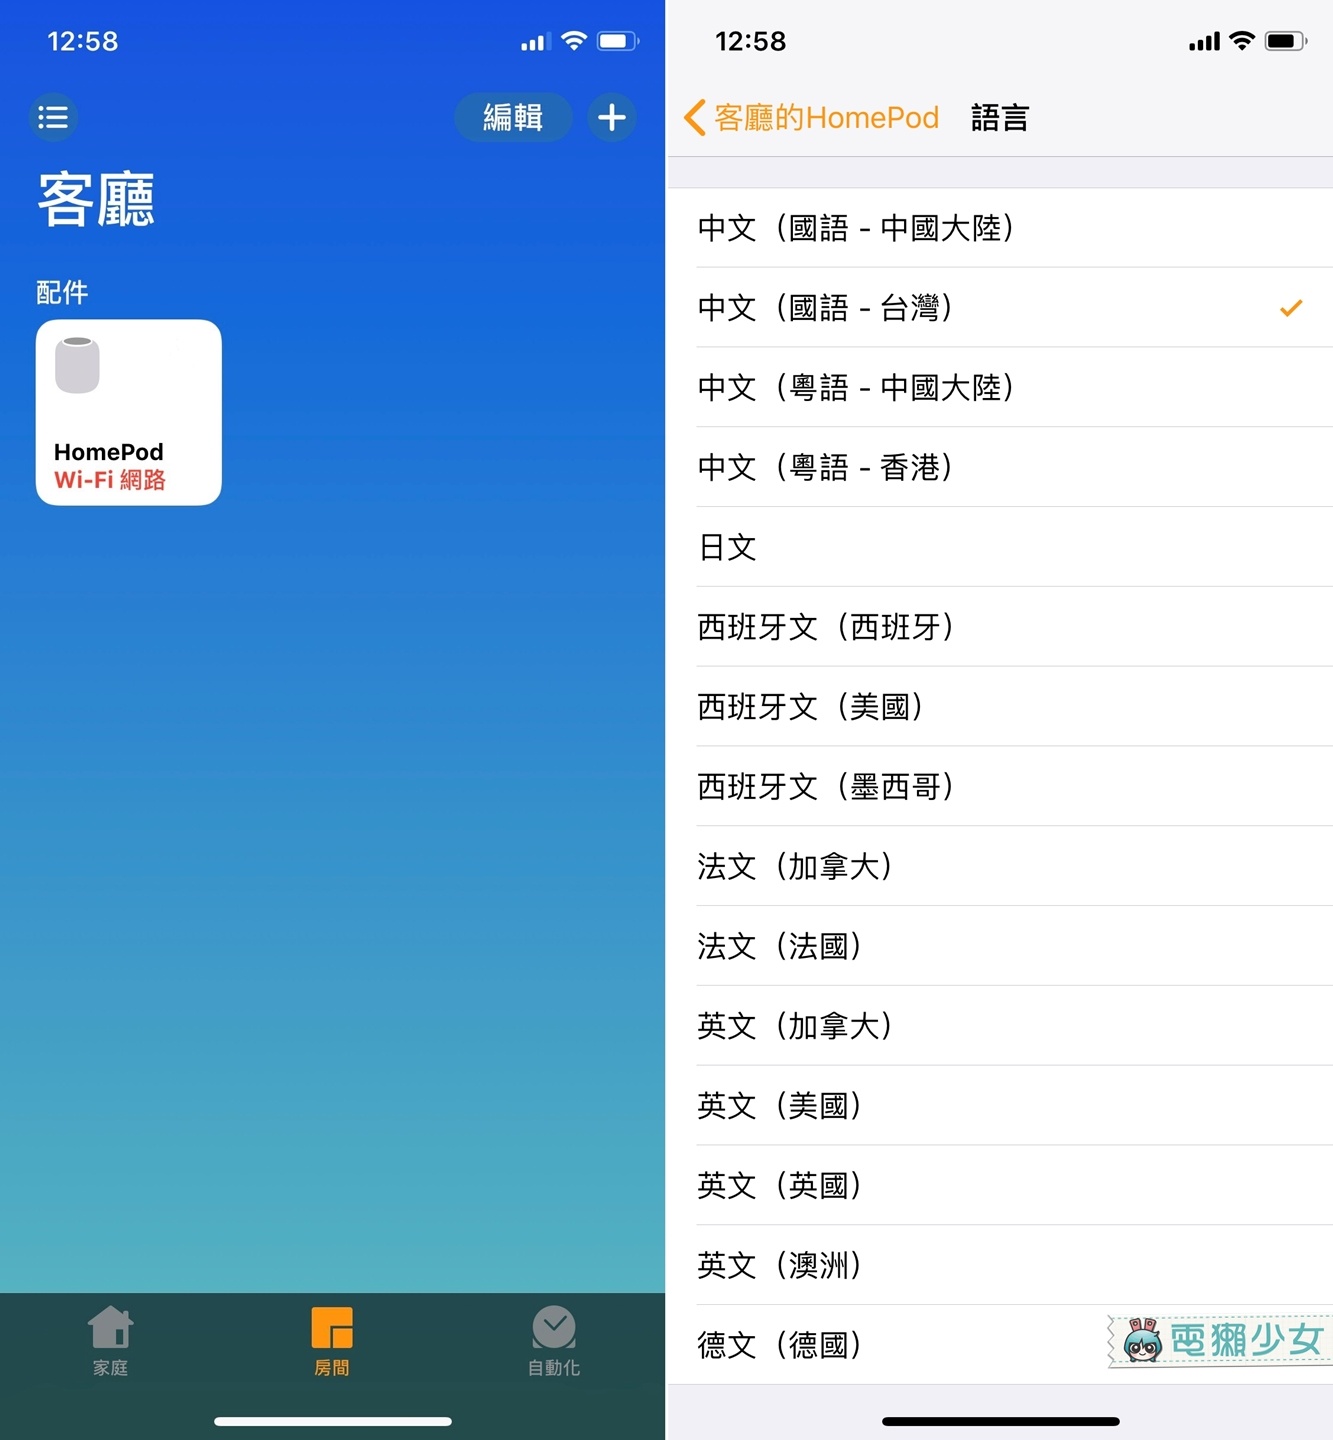 Apple HomePod 蘋果智慧音箱 今天8月23日台灣正式開賣！我們也搶先入手拉～